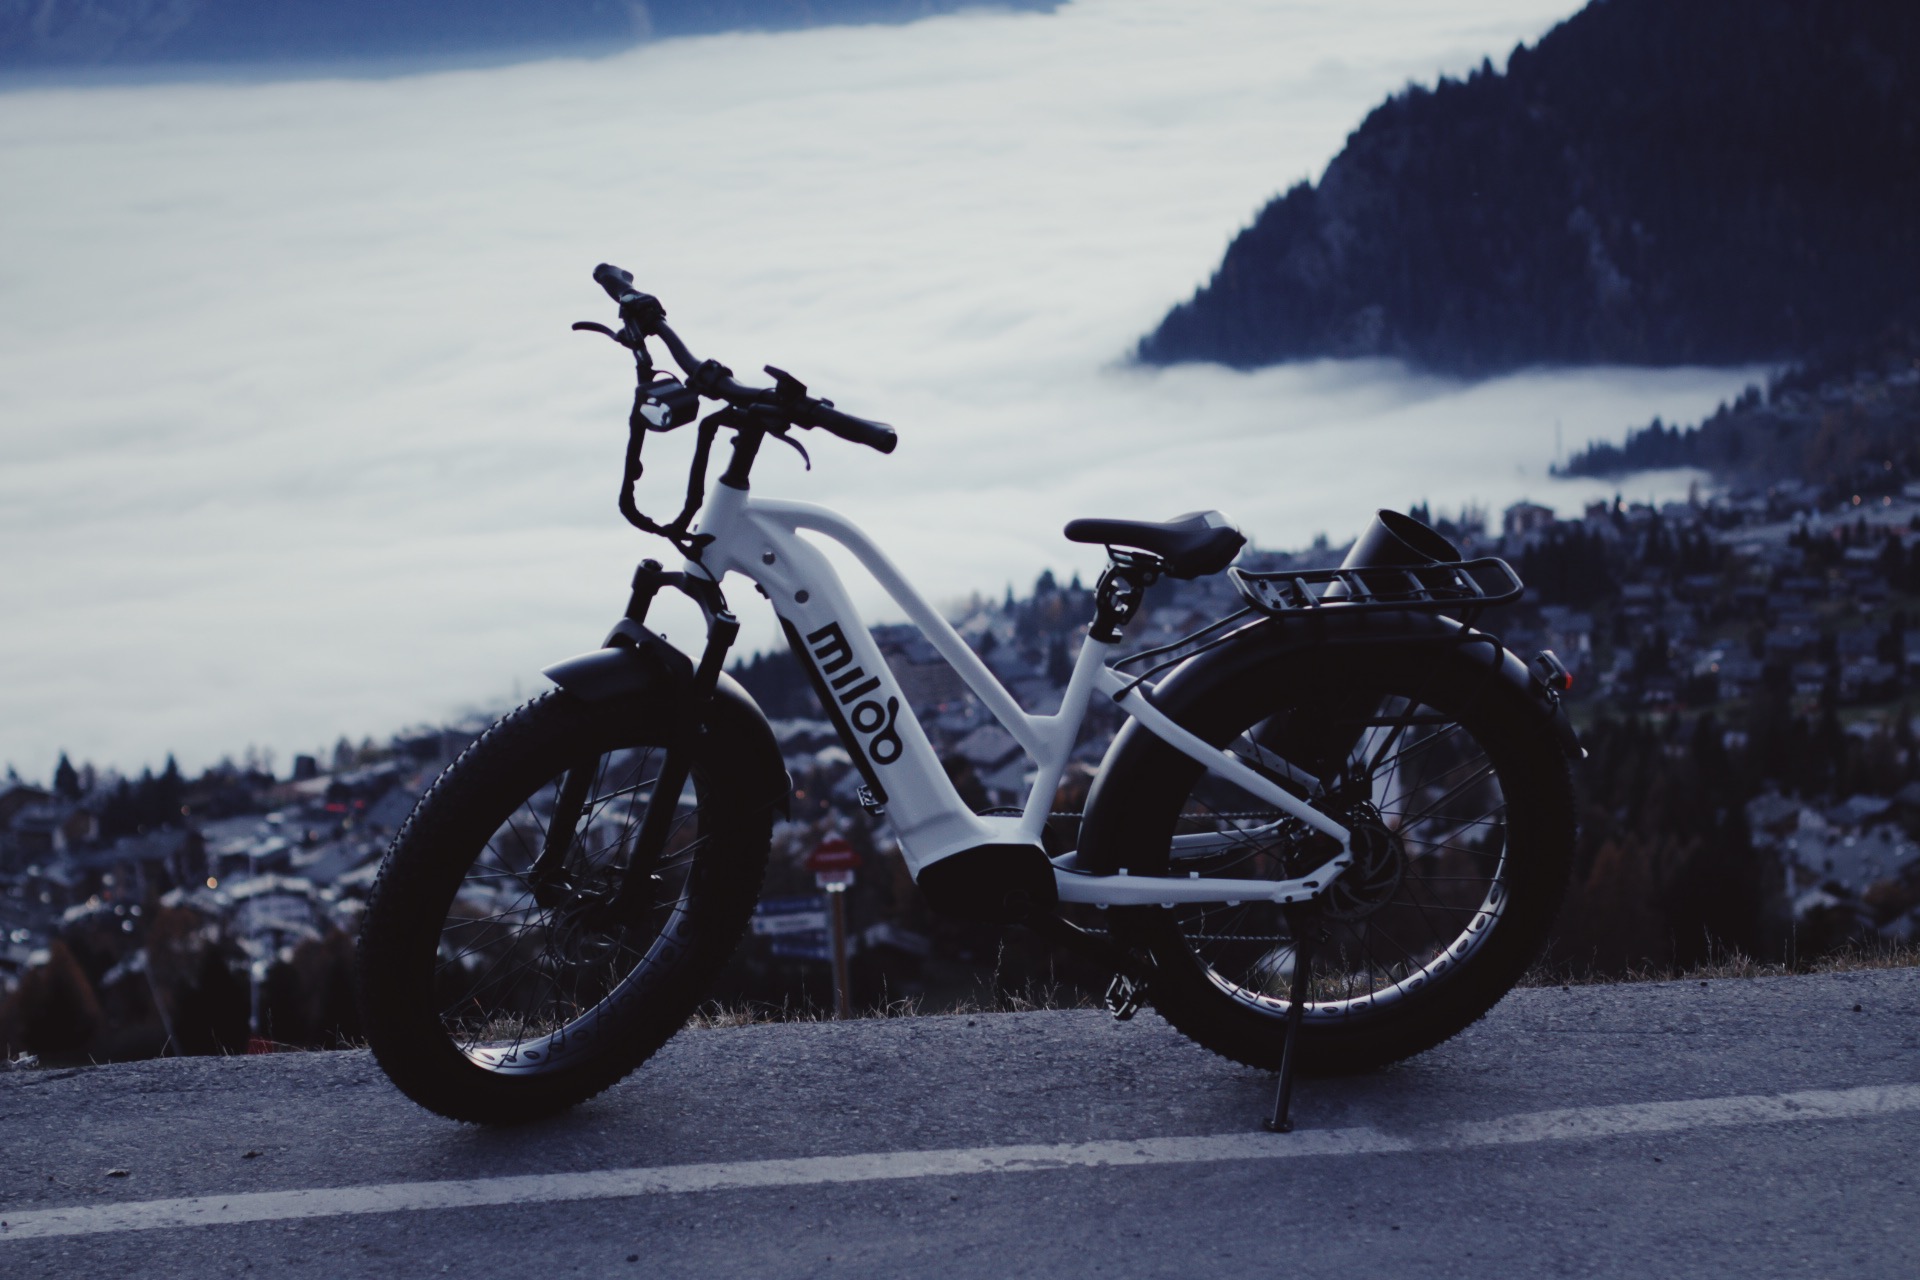 Miloo Bike at the lake